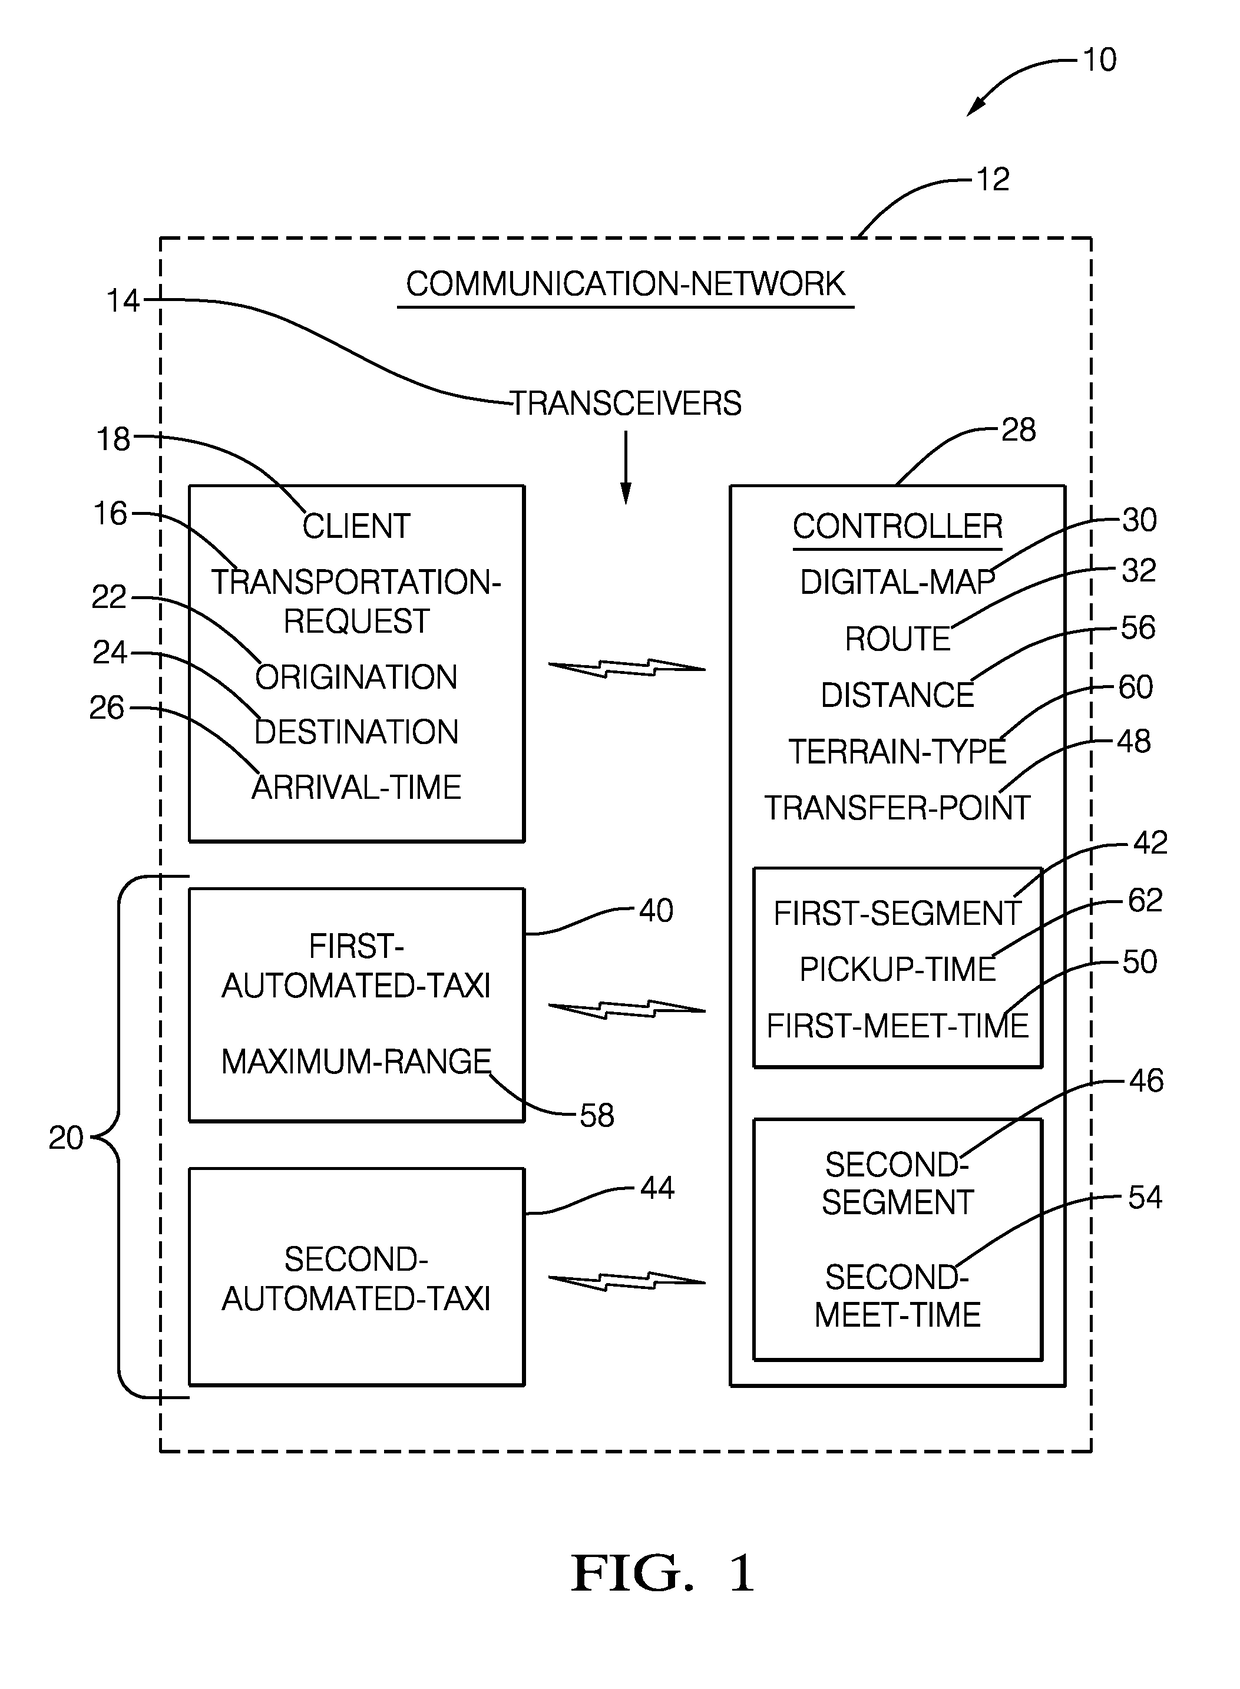 Automated vehicle transportation system for multiple-segment ground-transportation